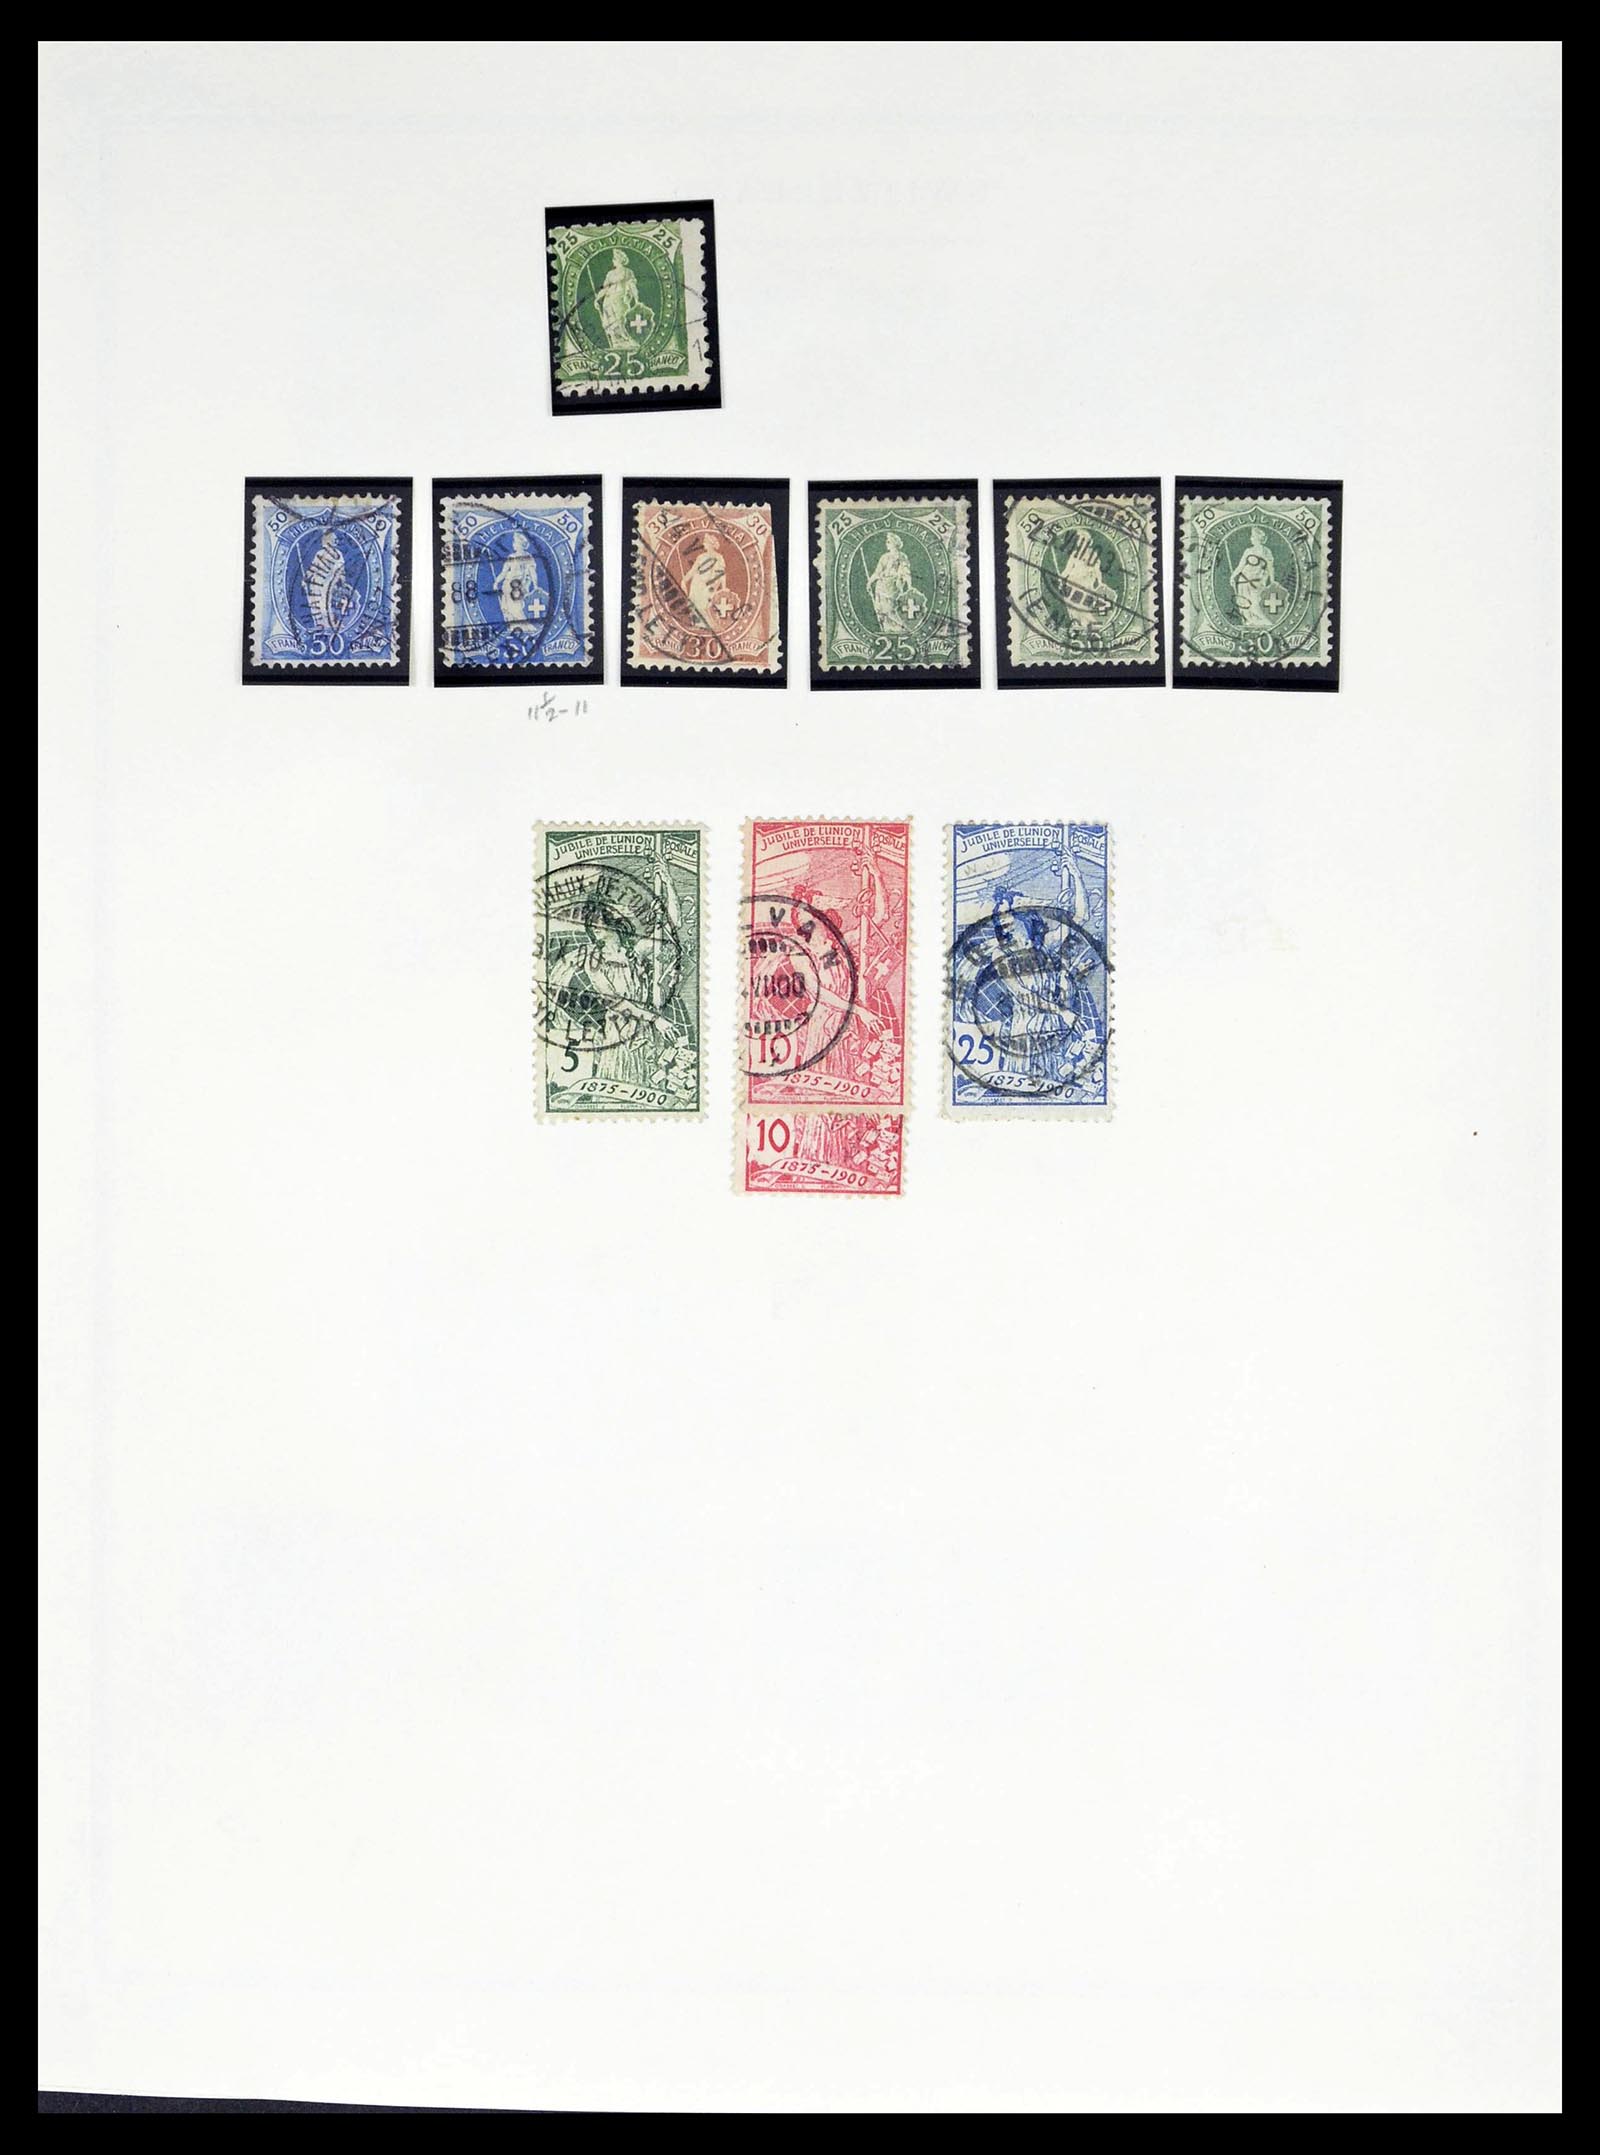 39178 0006 - Stamp collection 39178 Switzerland 1850-1989.